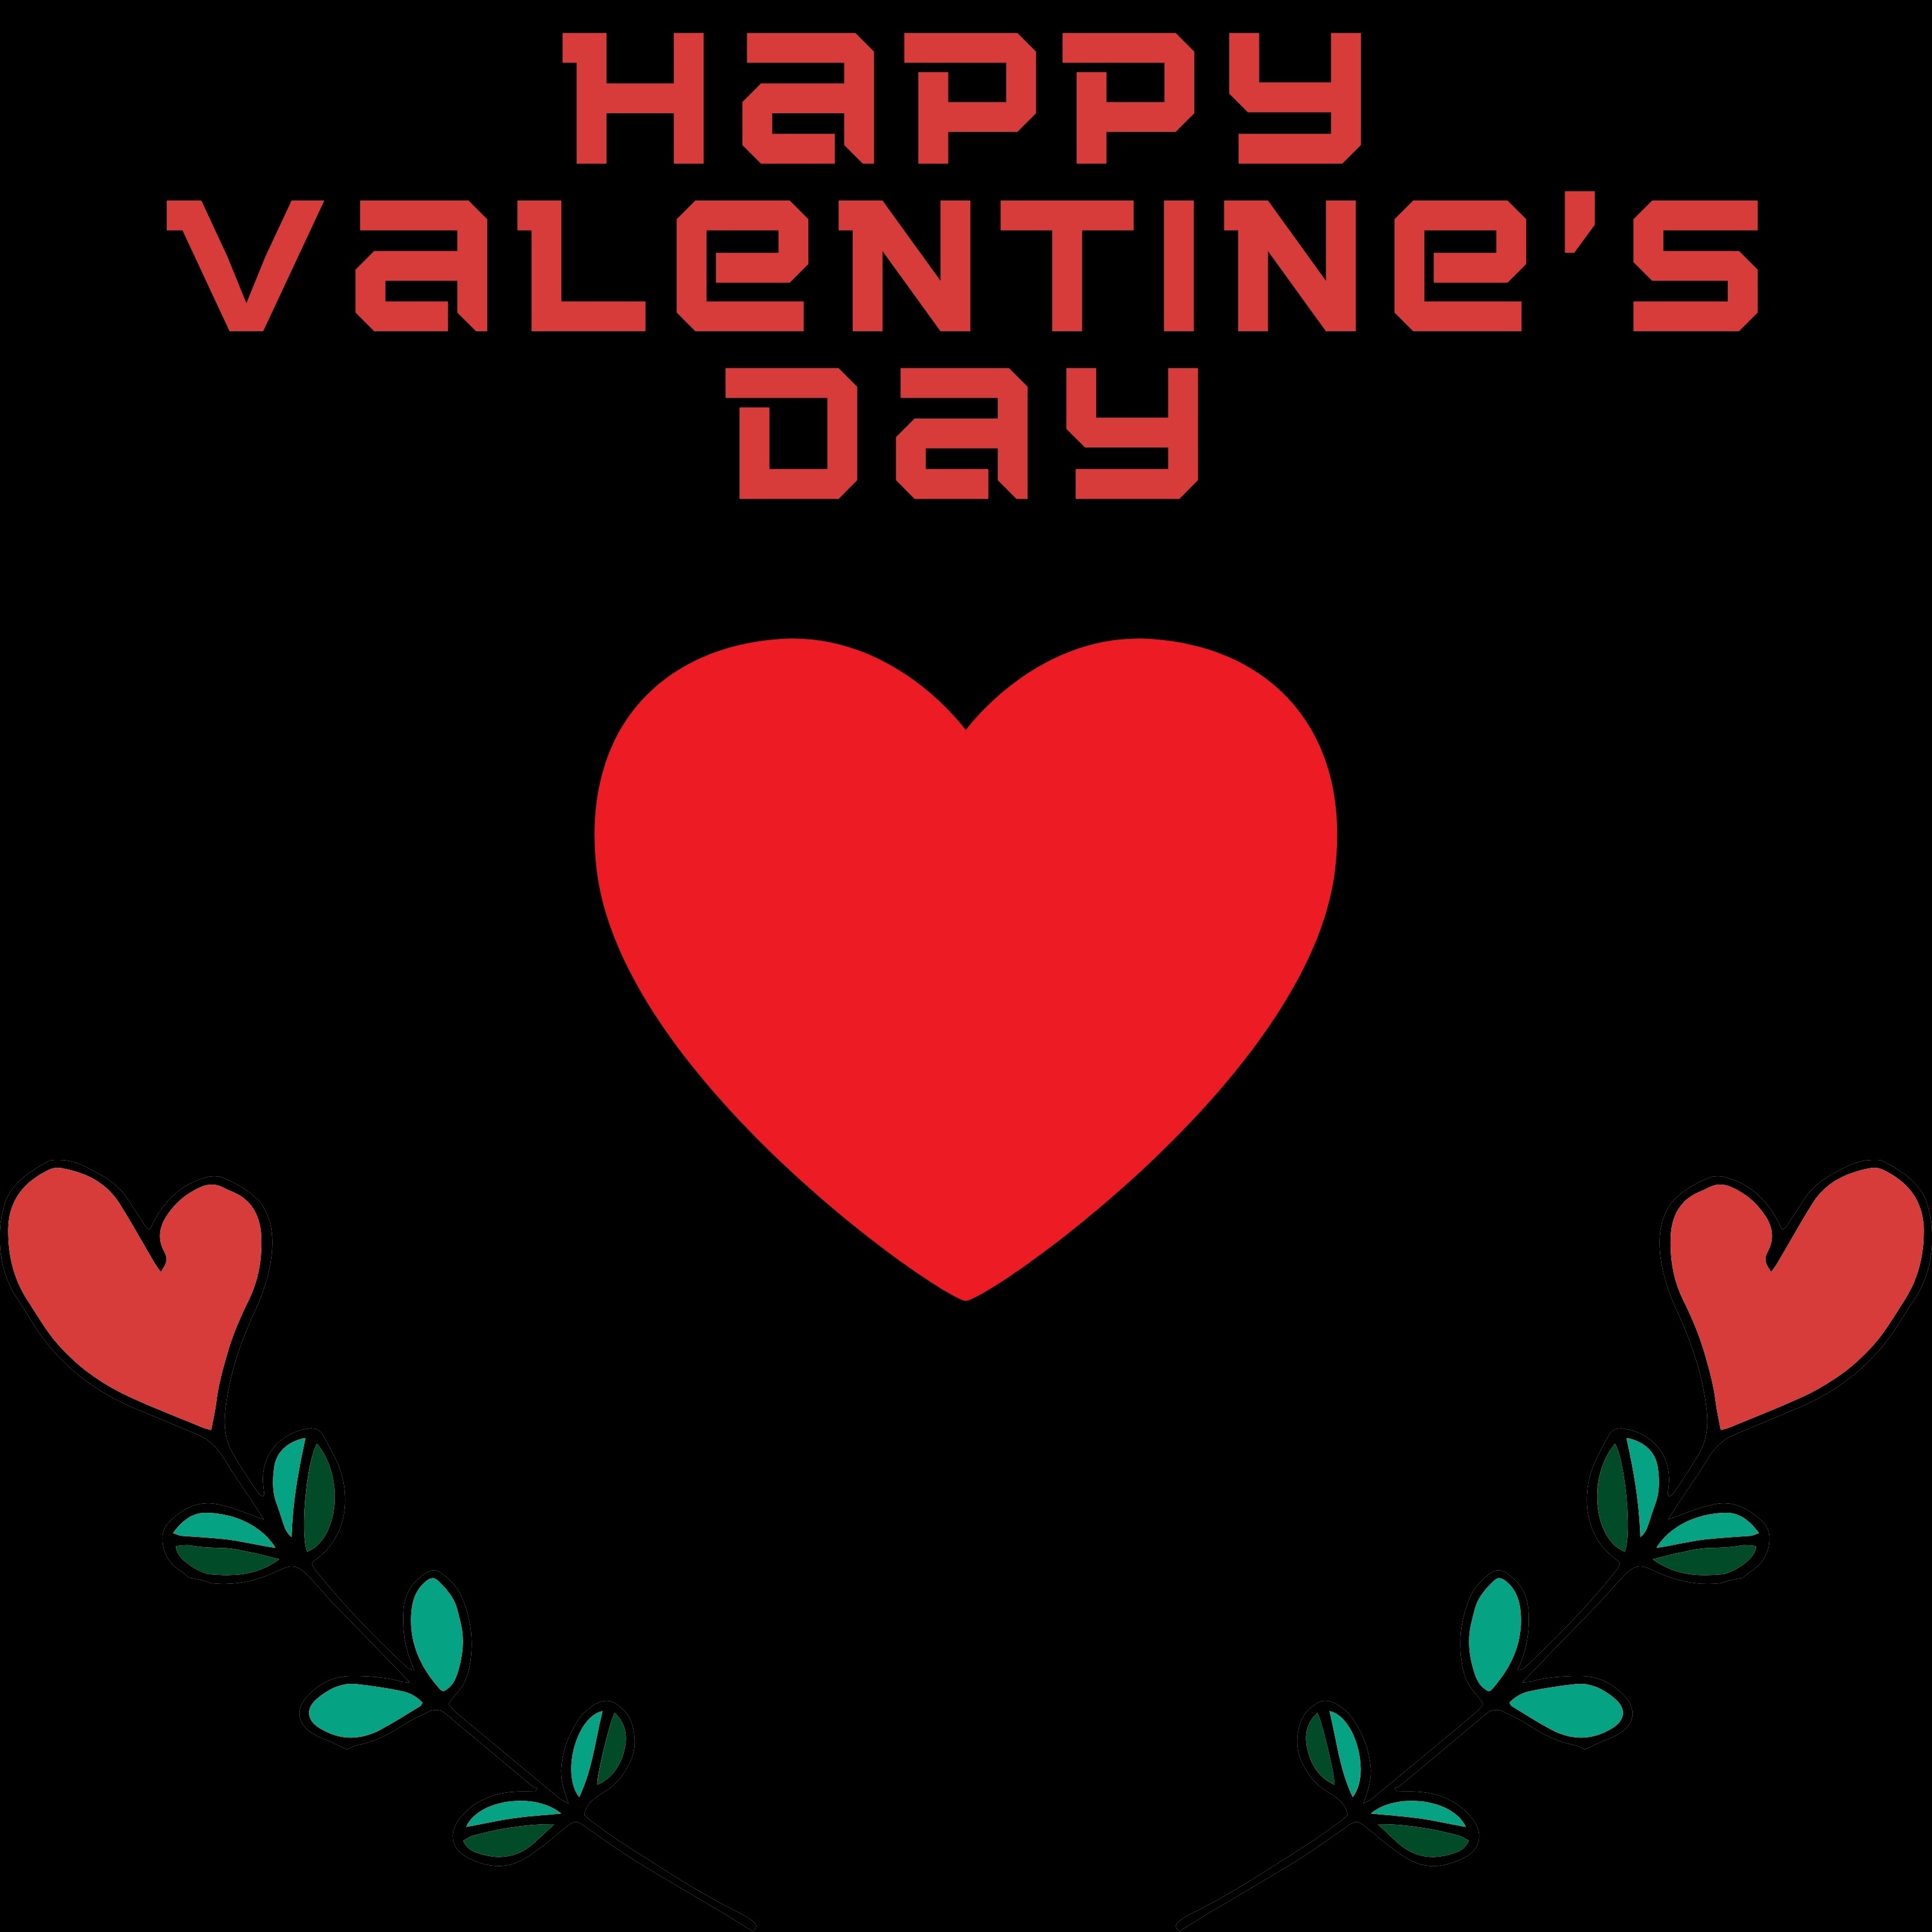 Happy Valentines Day February 14 iPad Wallpaper